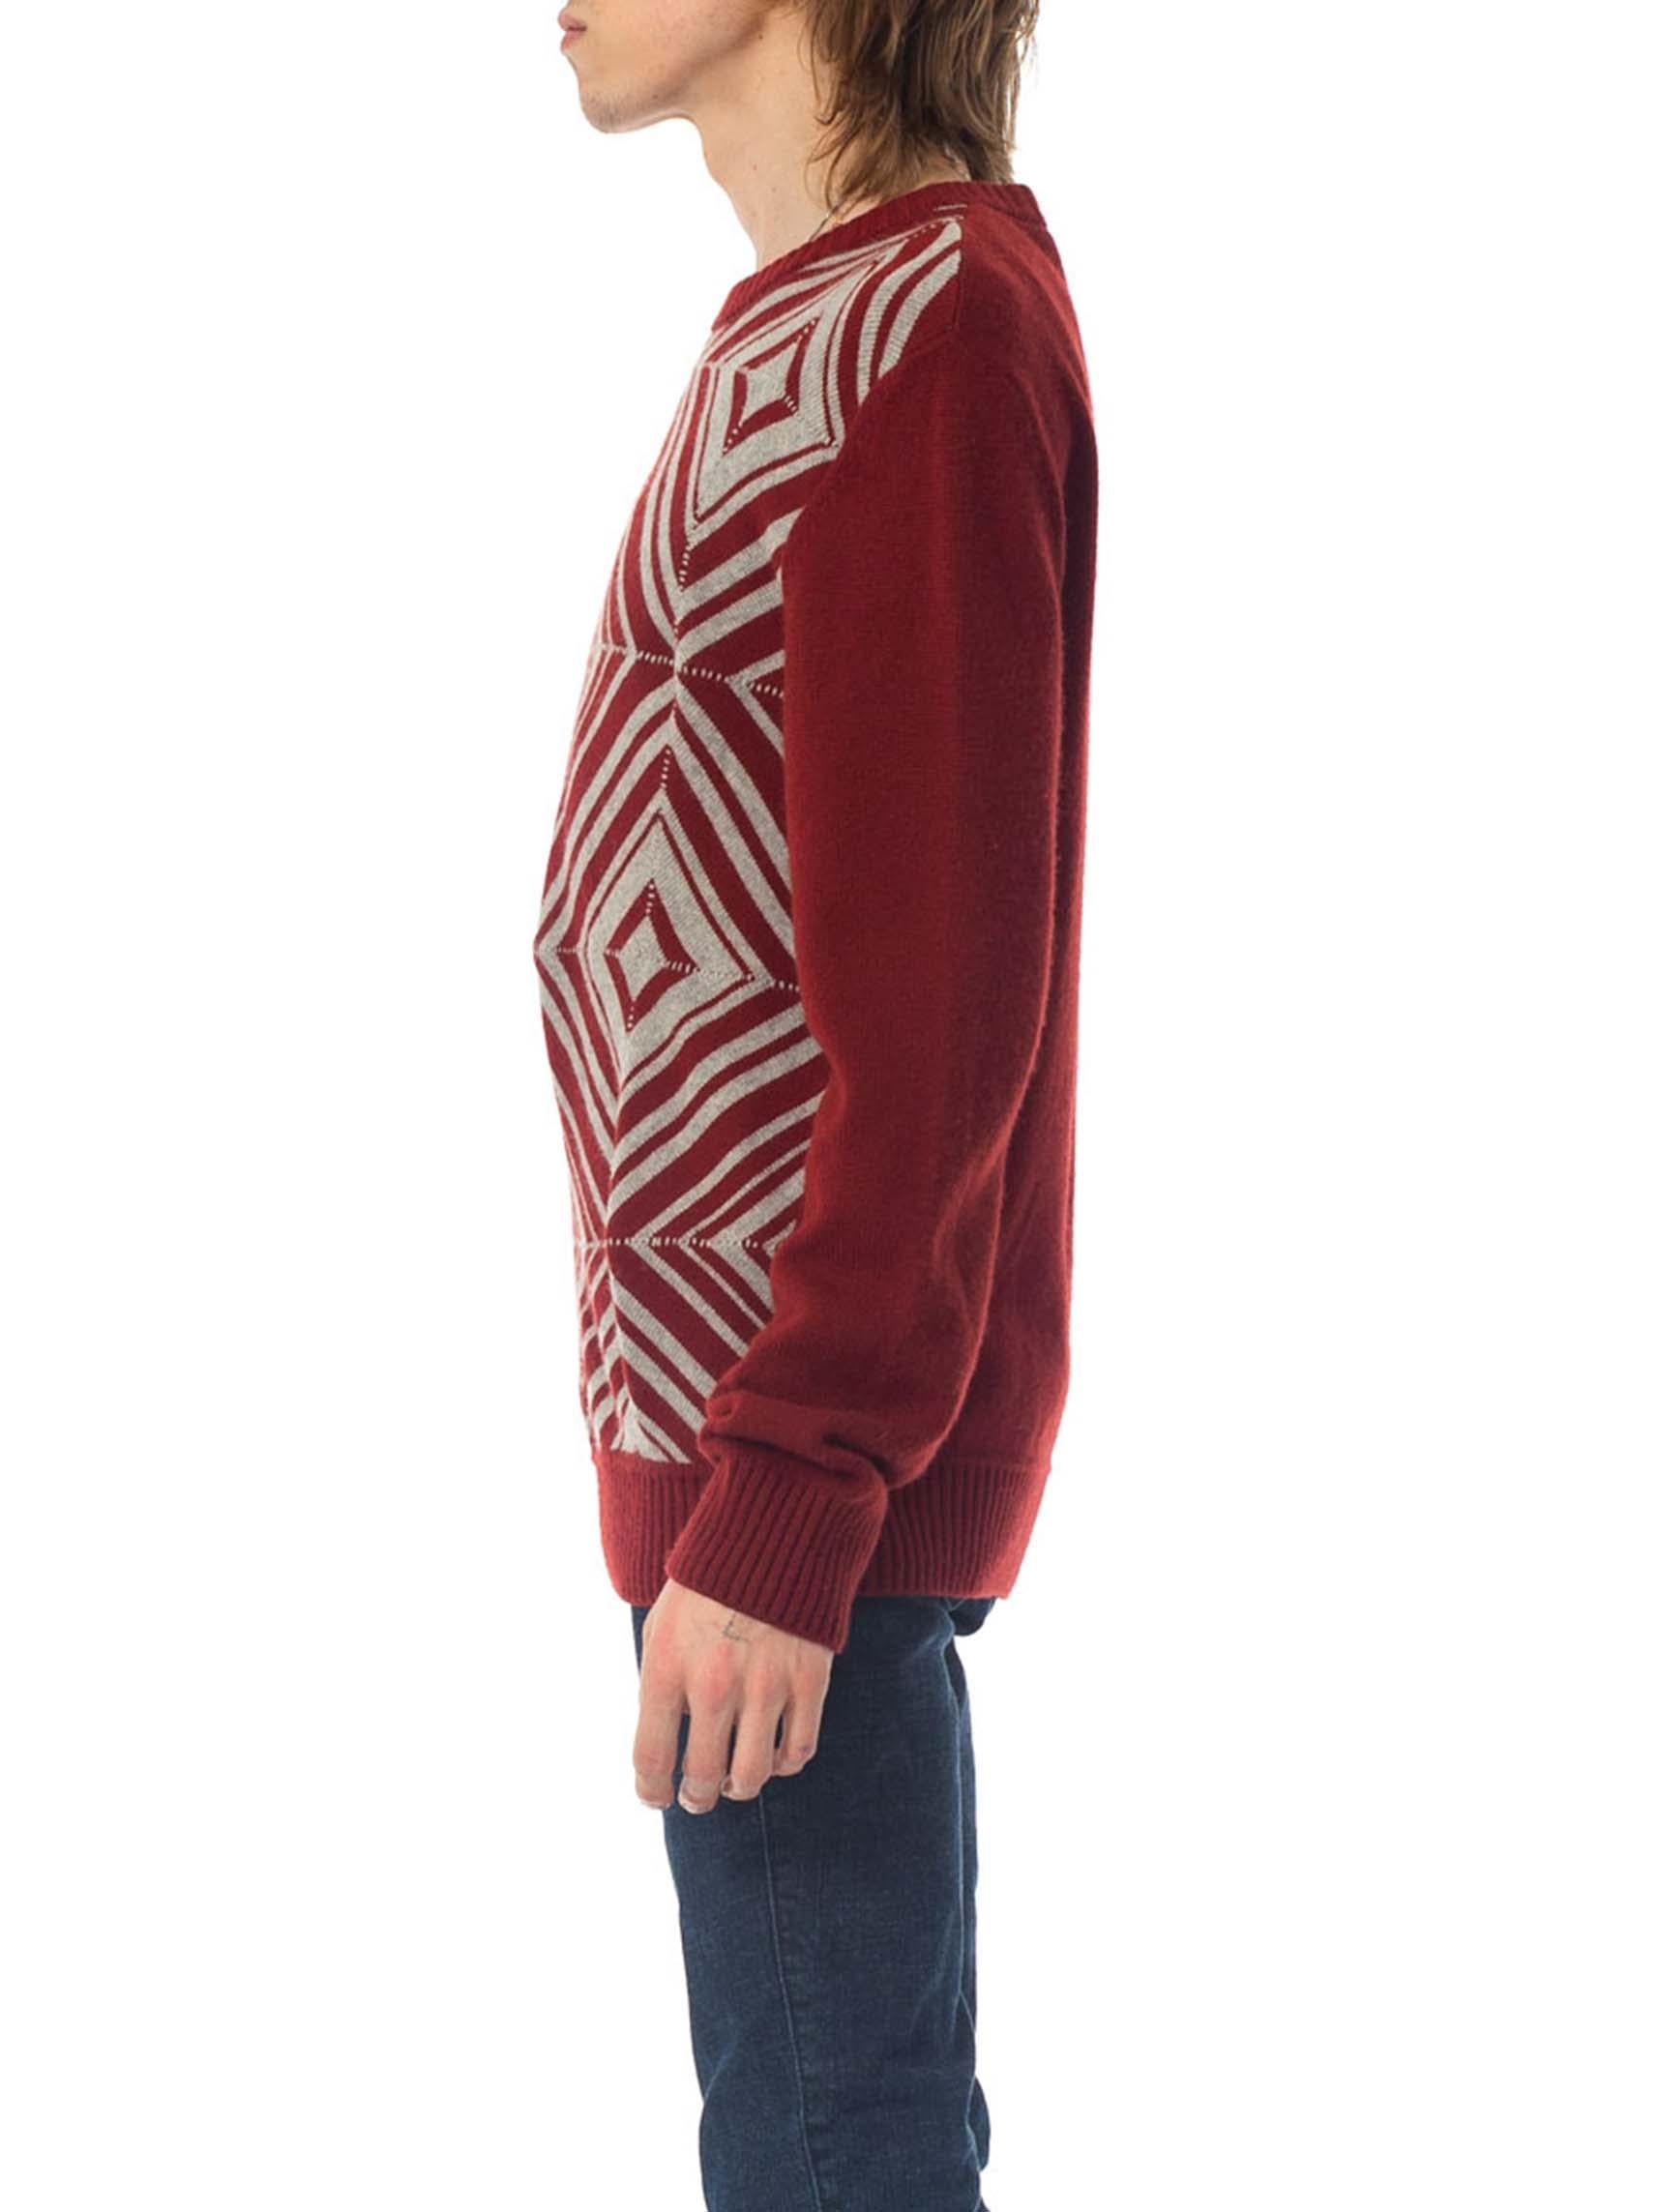 maroon sweater mens